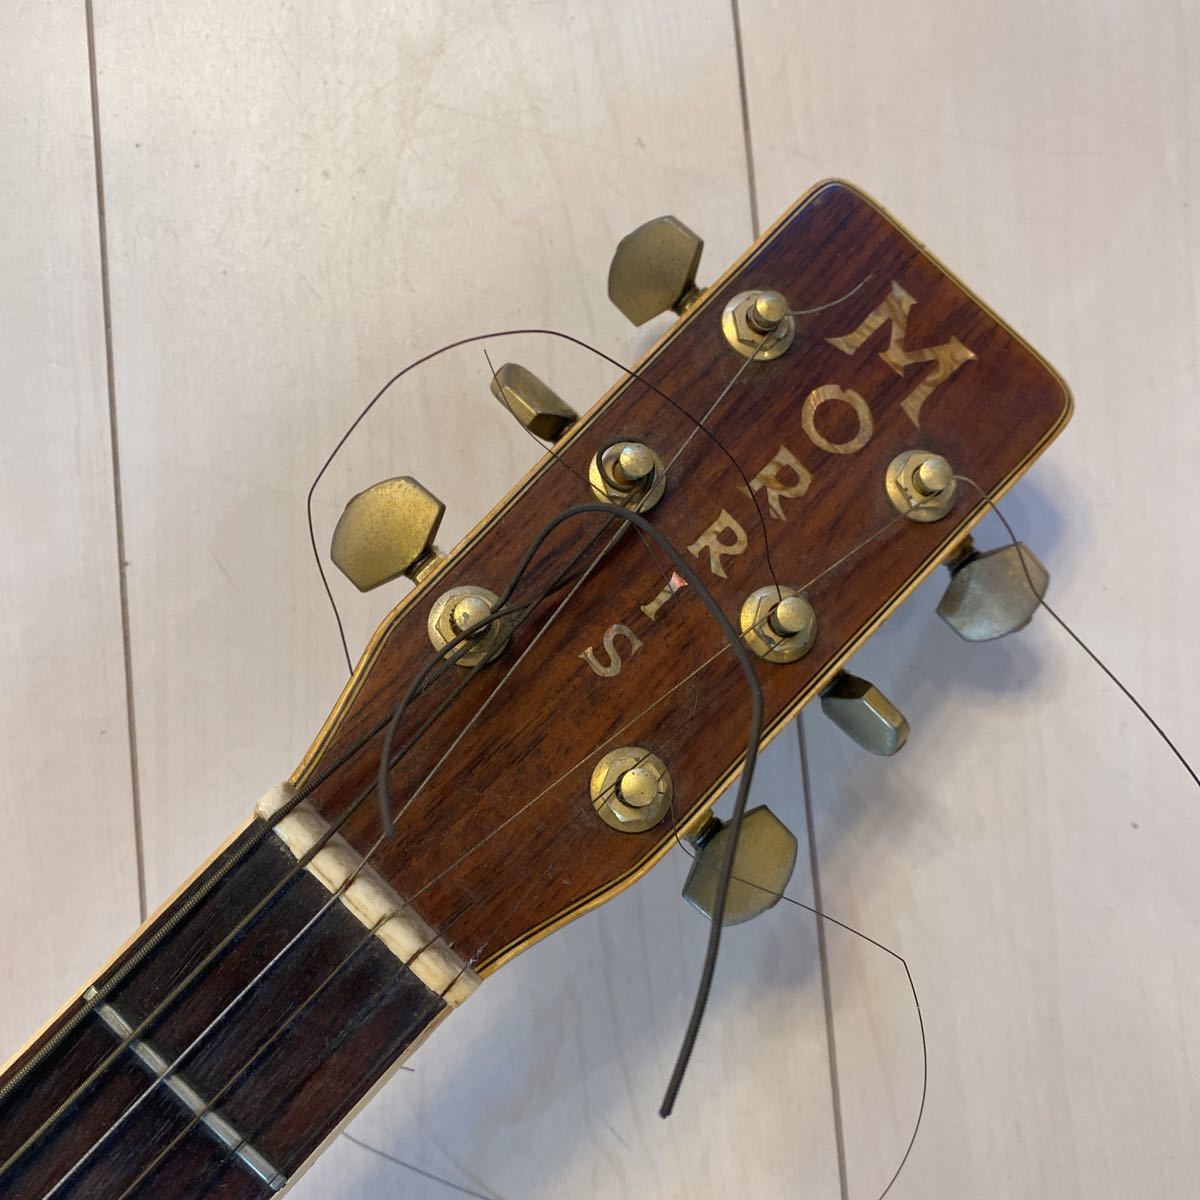 Morris アコースティックギター 縦ロゴ モデル不明 ジャパン 